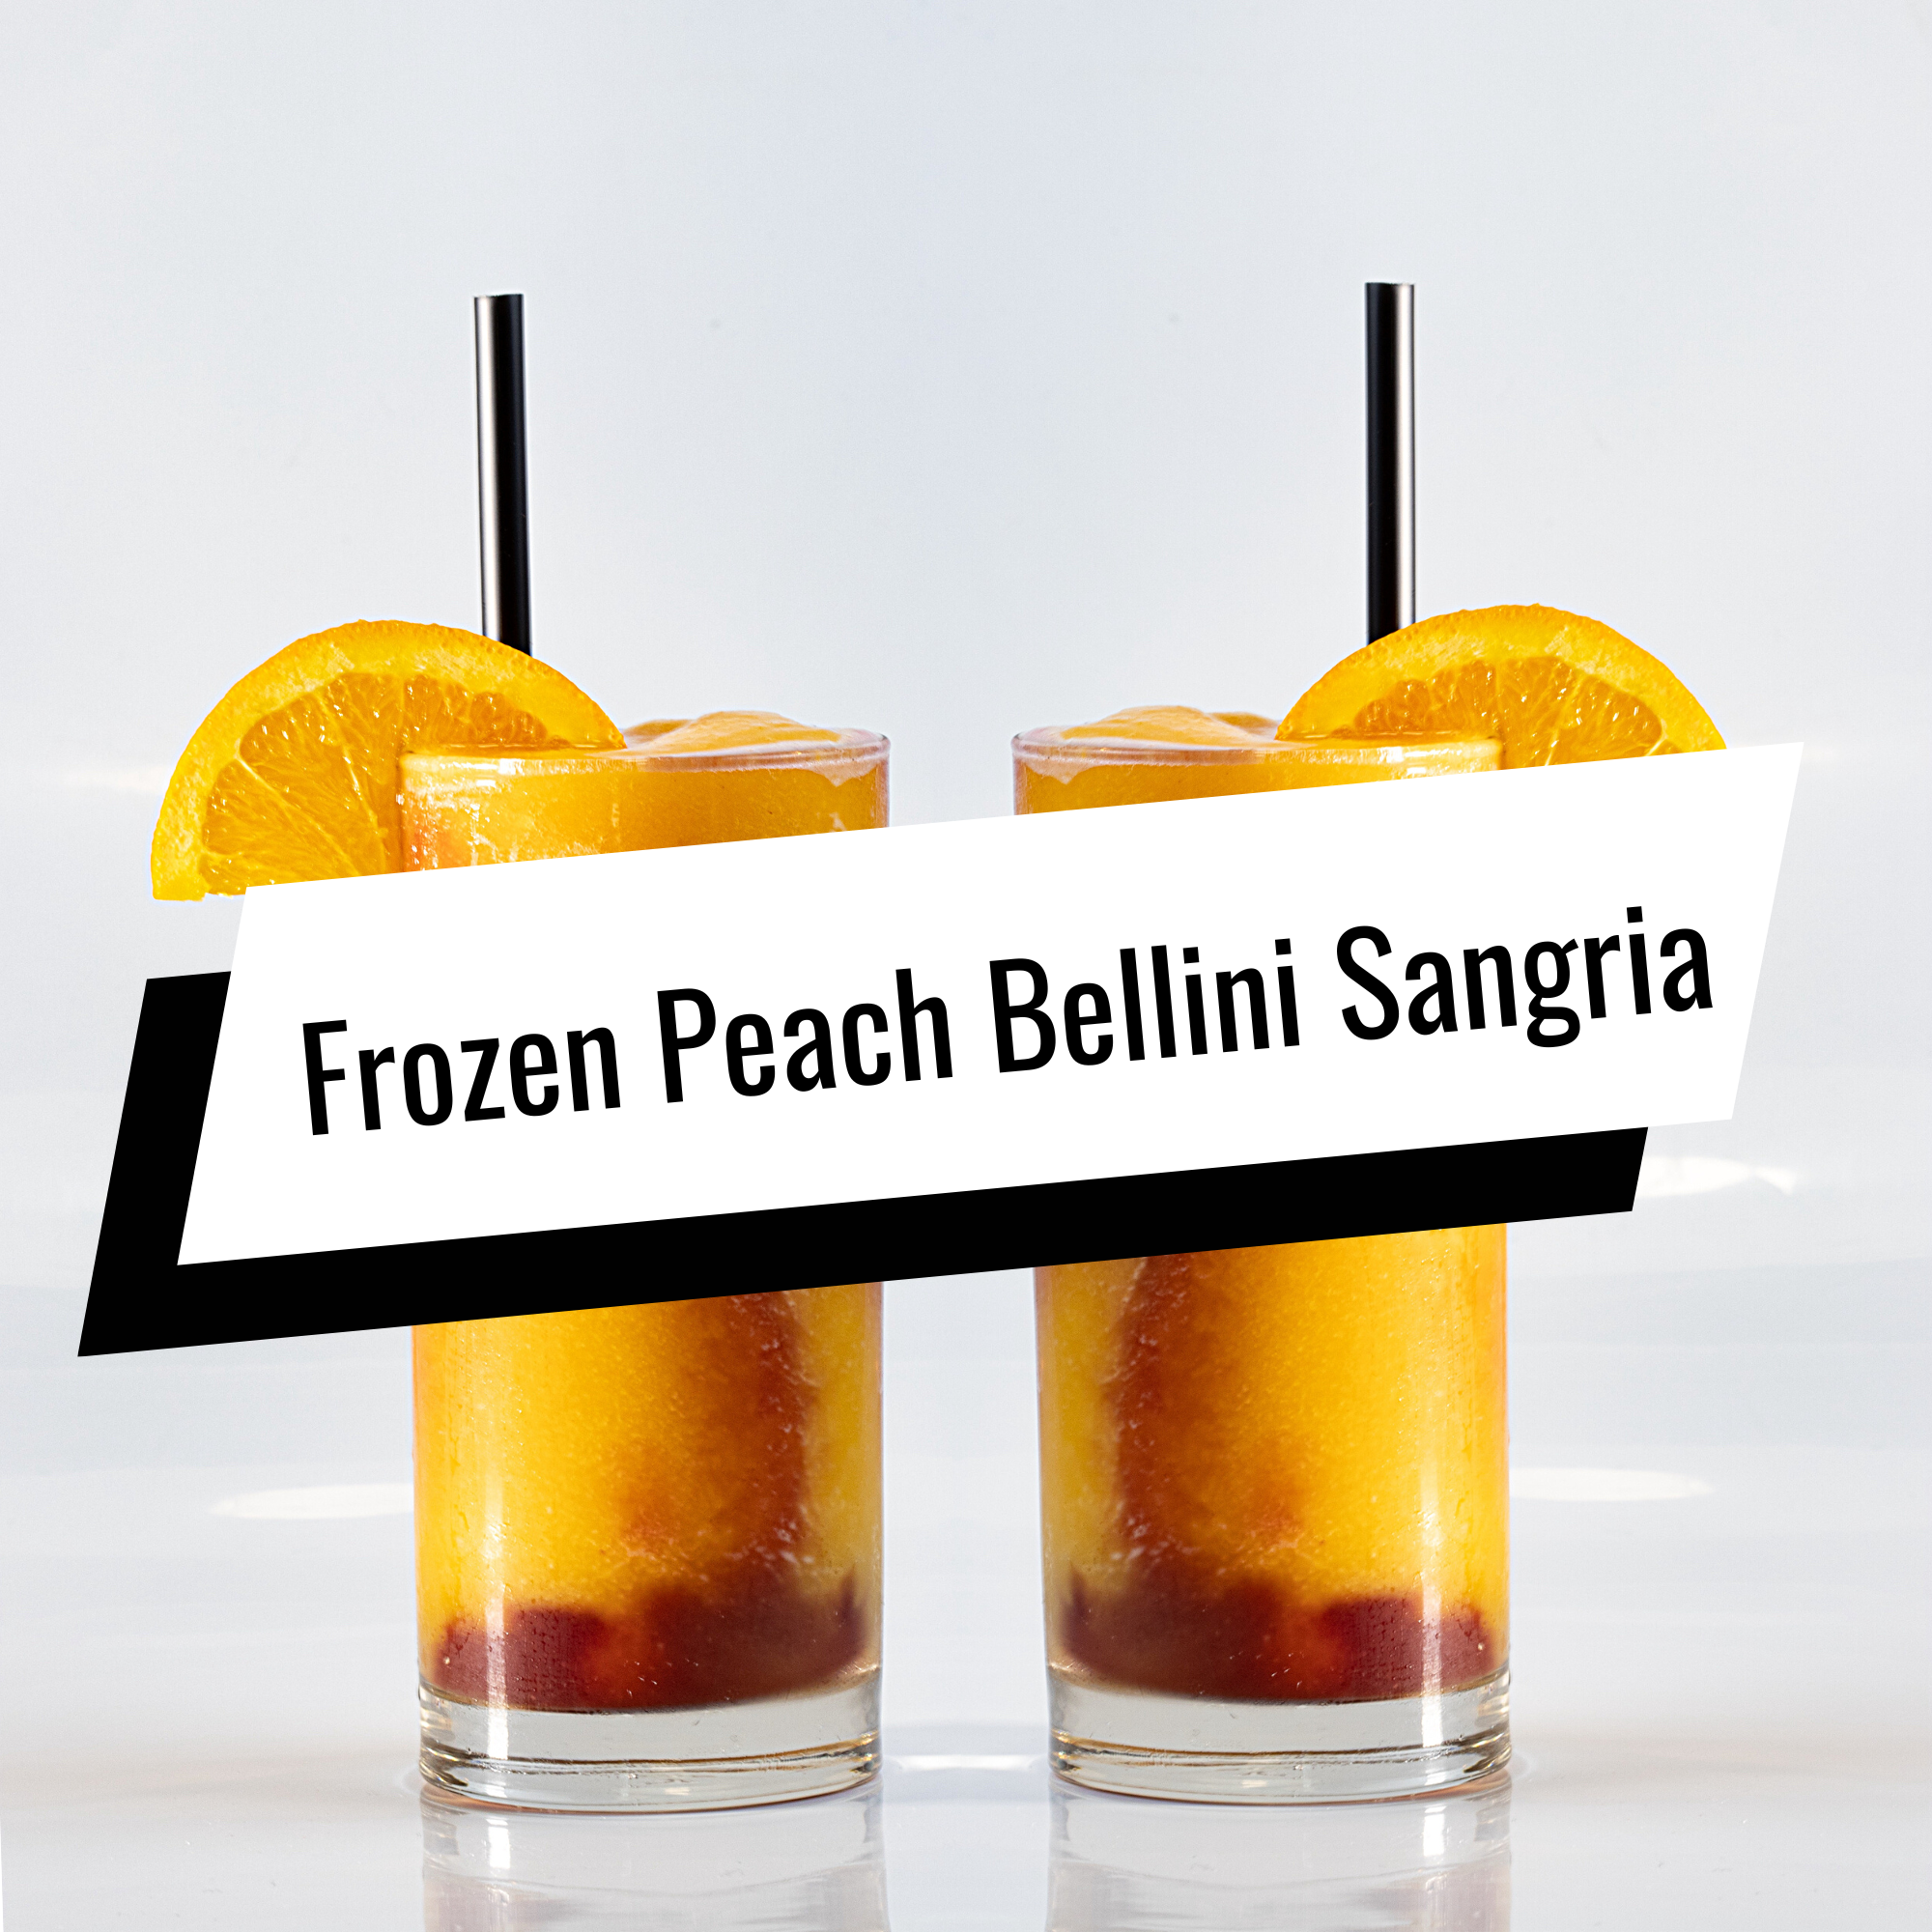 Frozen Peach Bellini Sangria